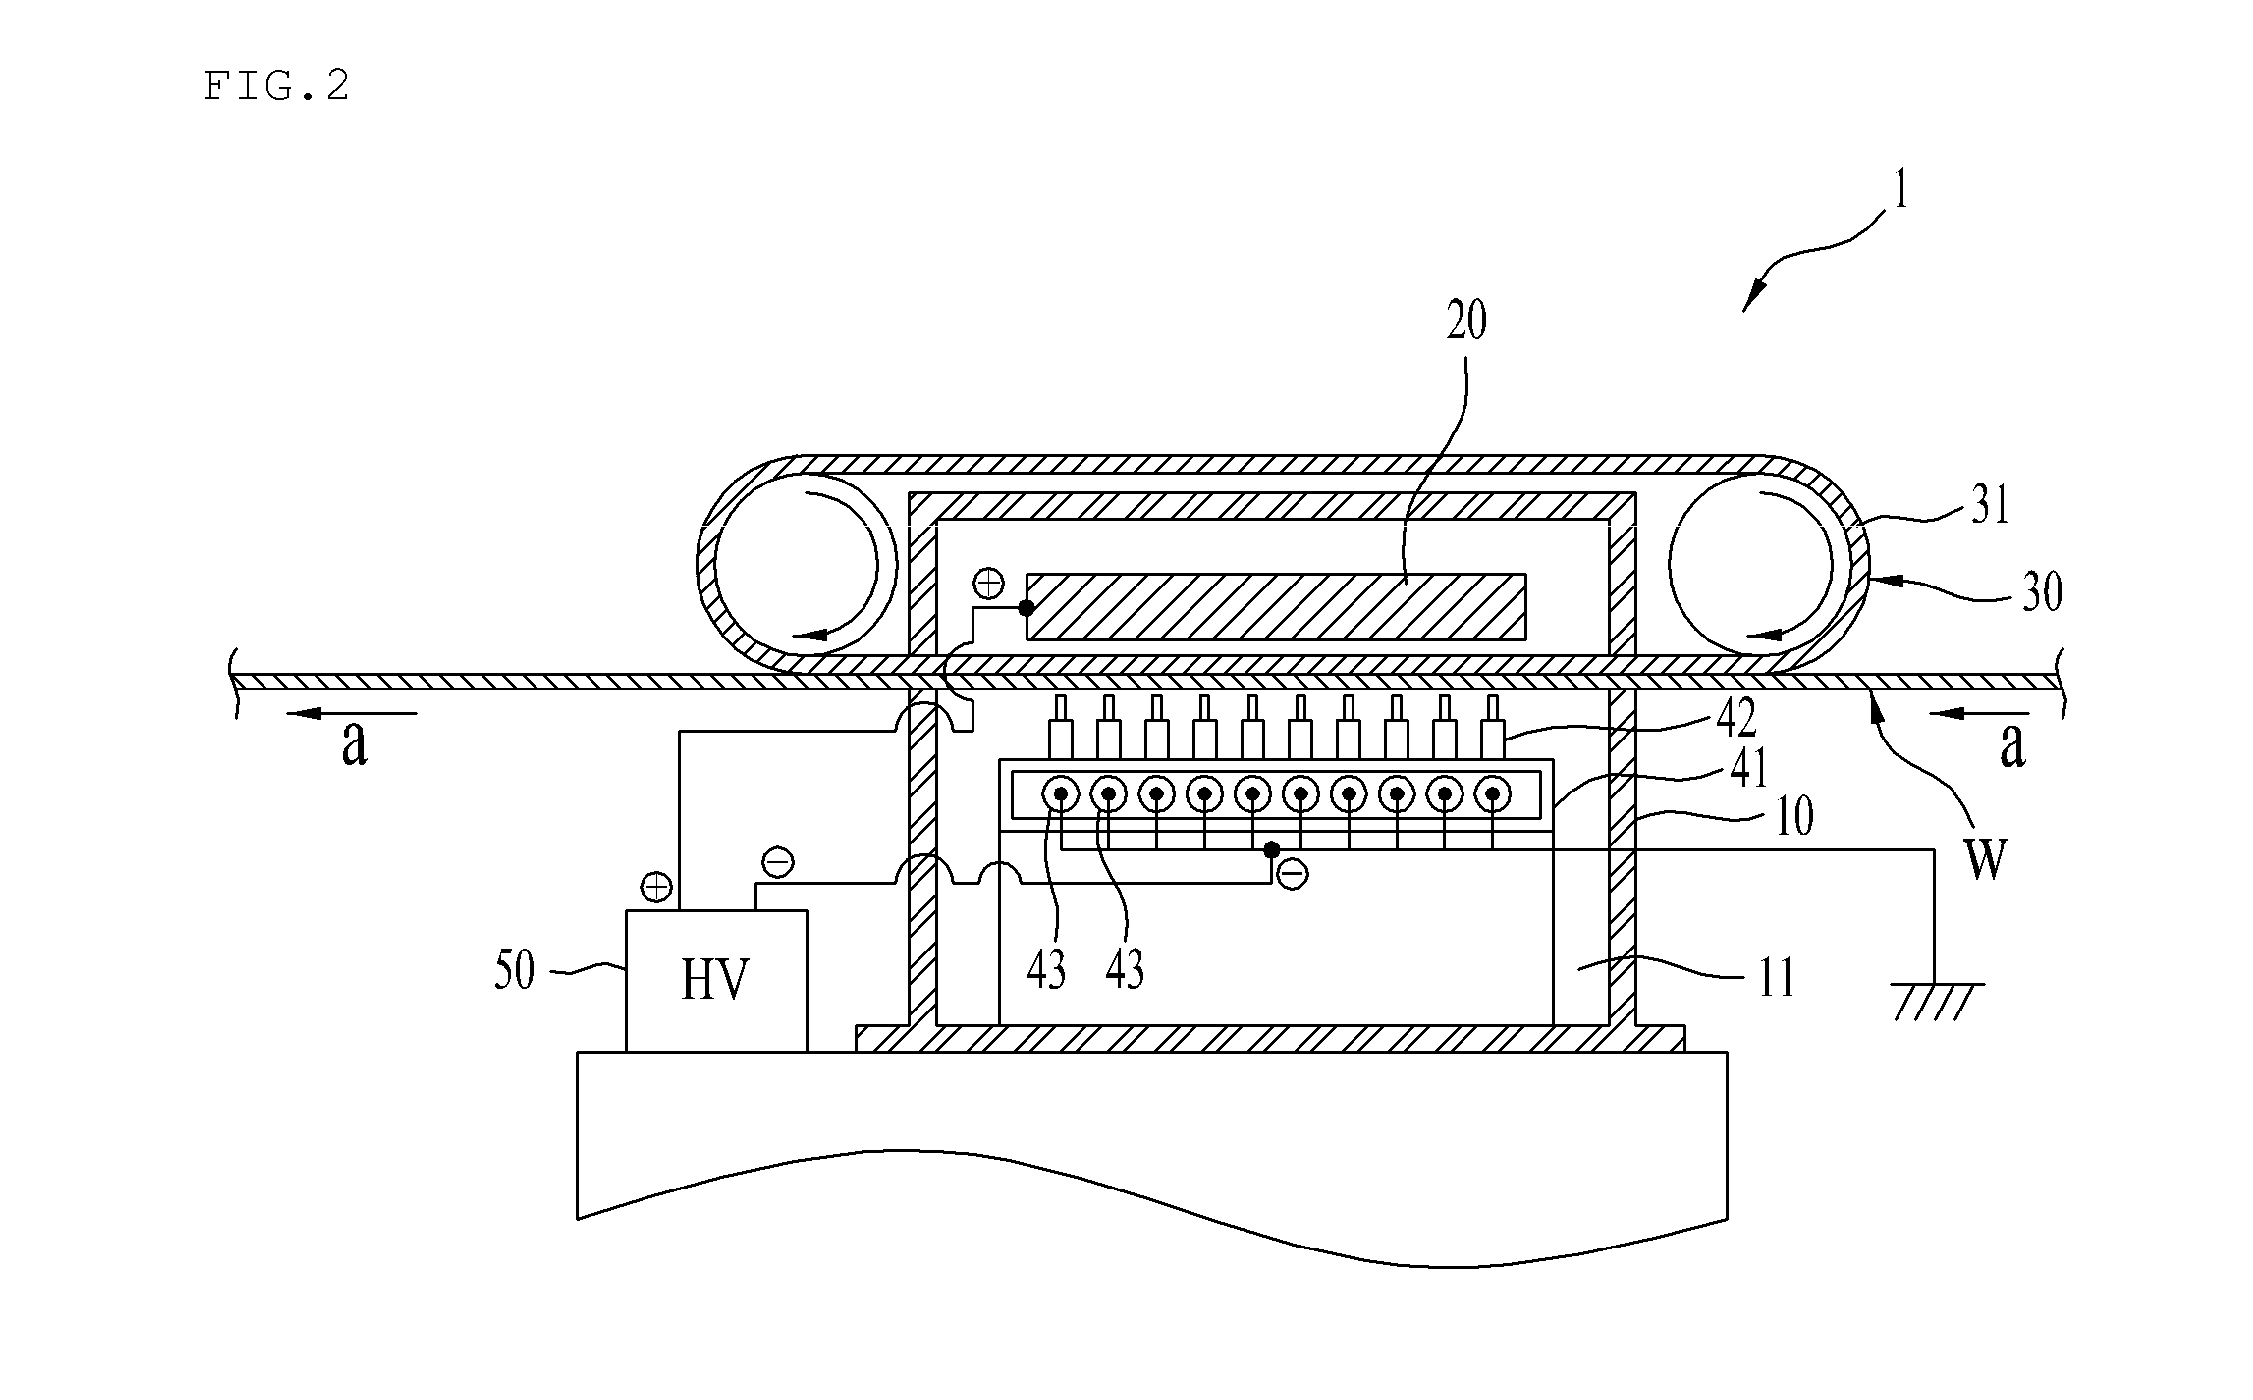 Electrospinning apparatus